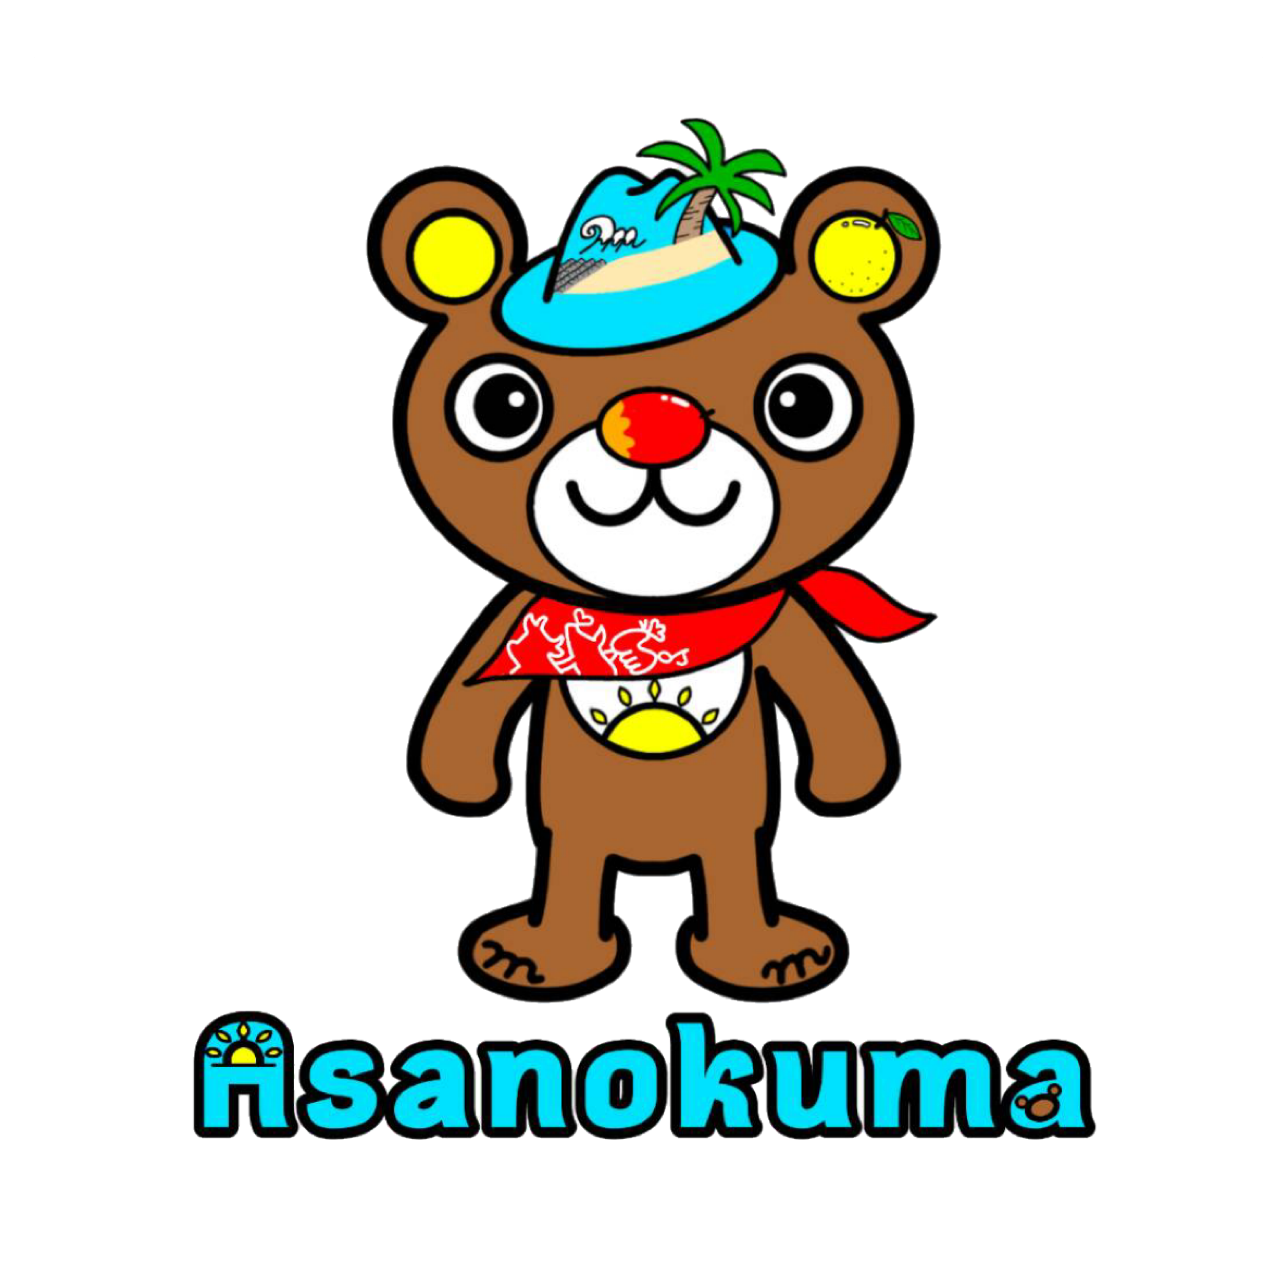 Asanokuma  shop base店